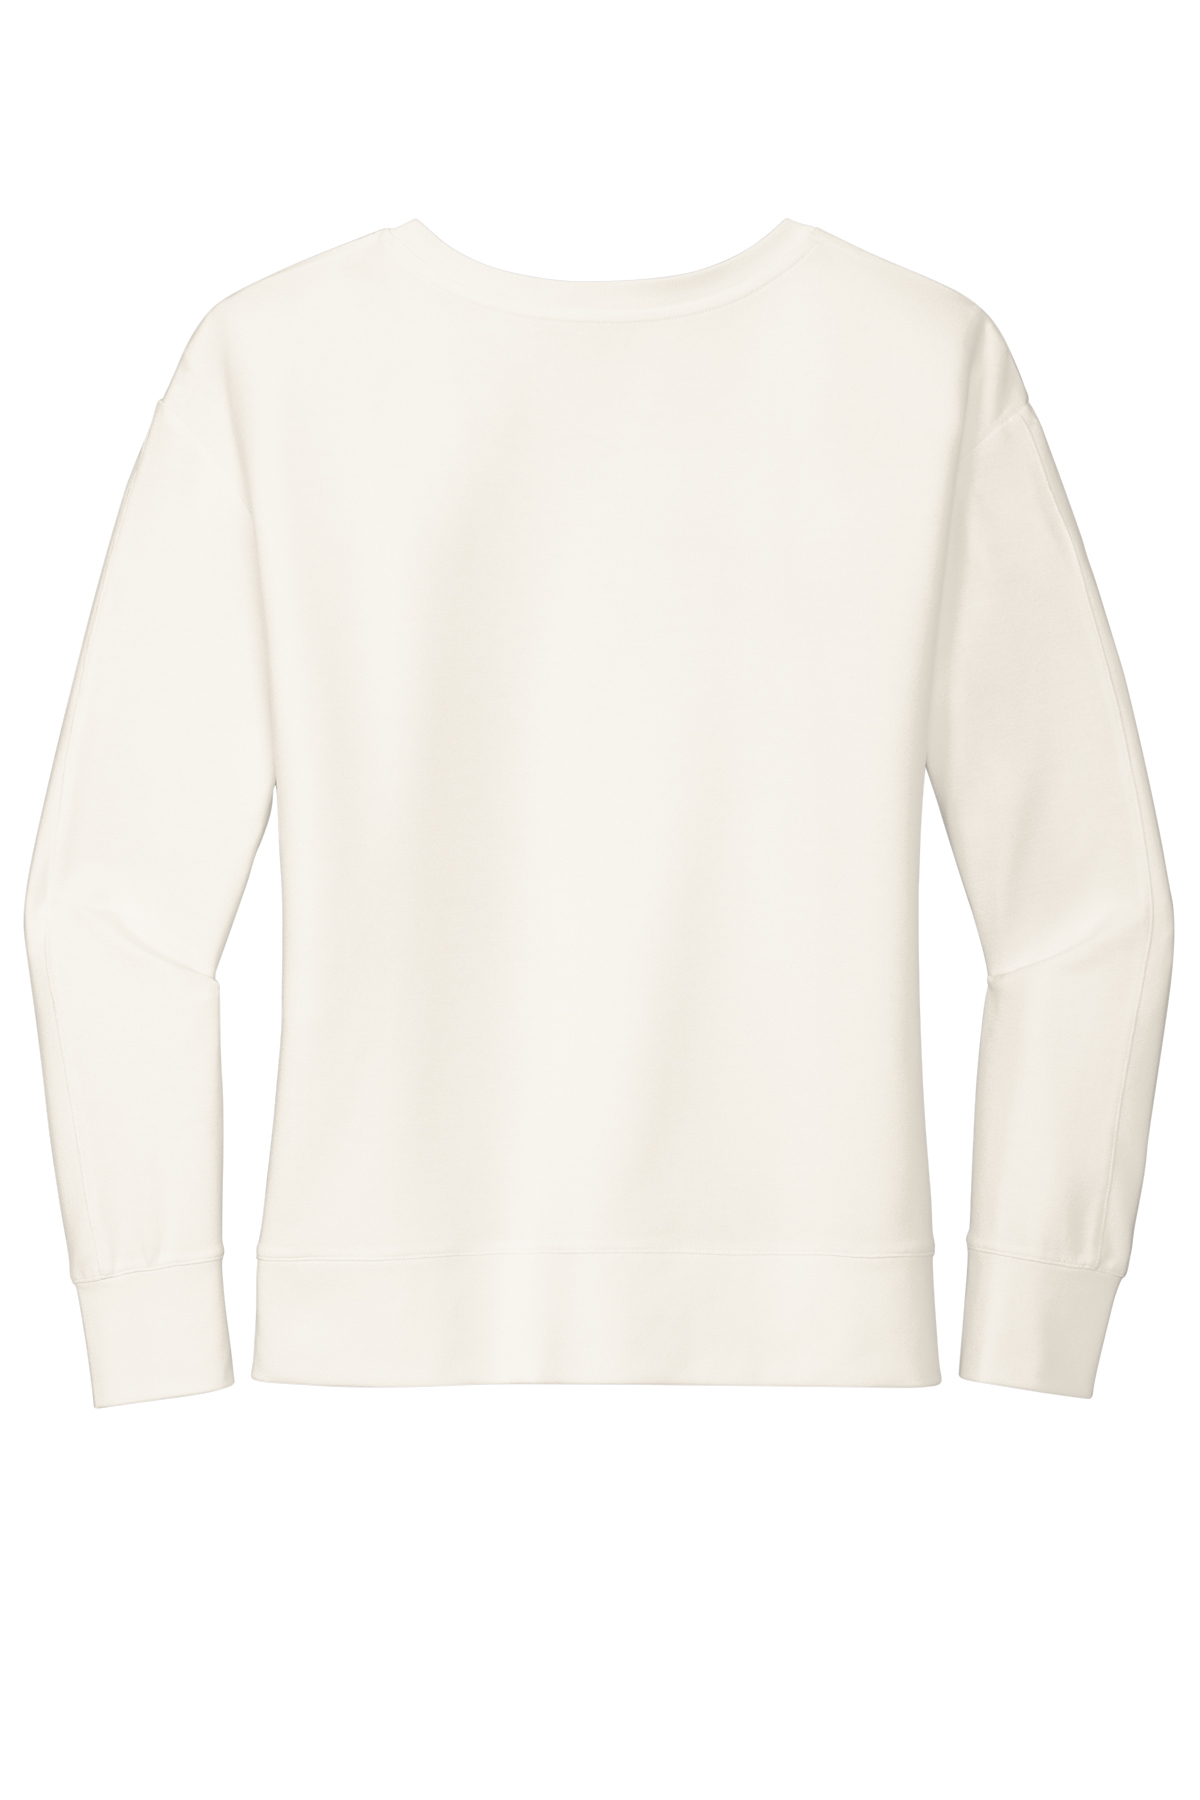 JDY Mio Longline Long Sleeve Cotton Shirt with Dip Hem in White